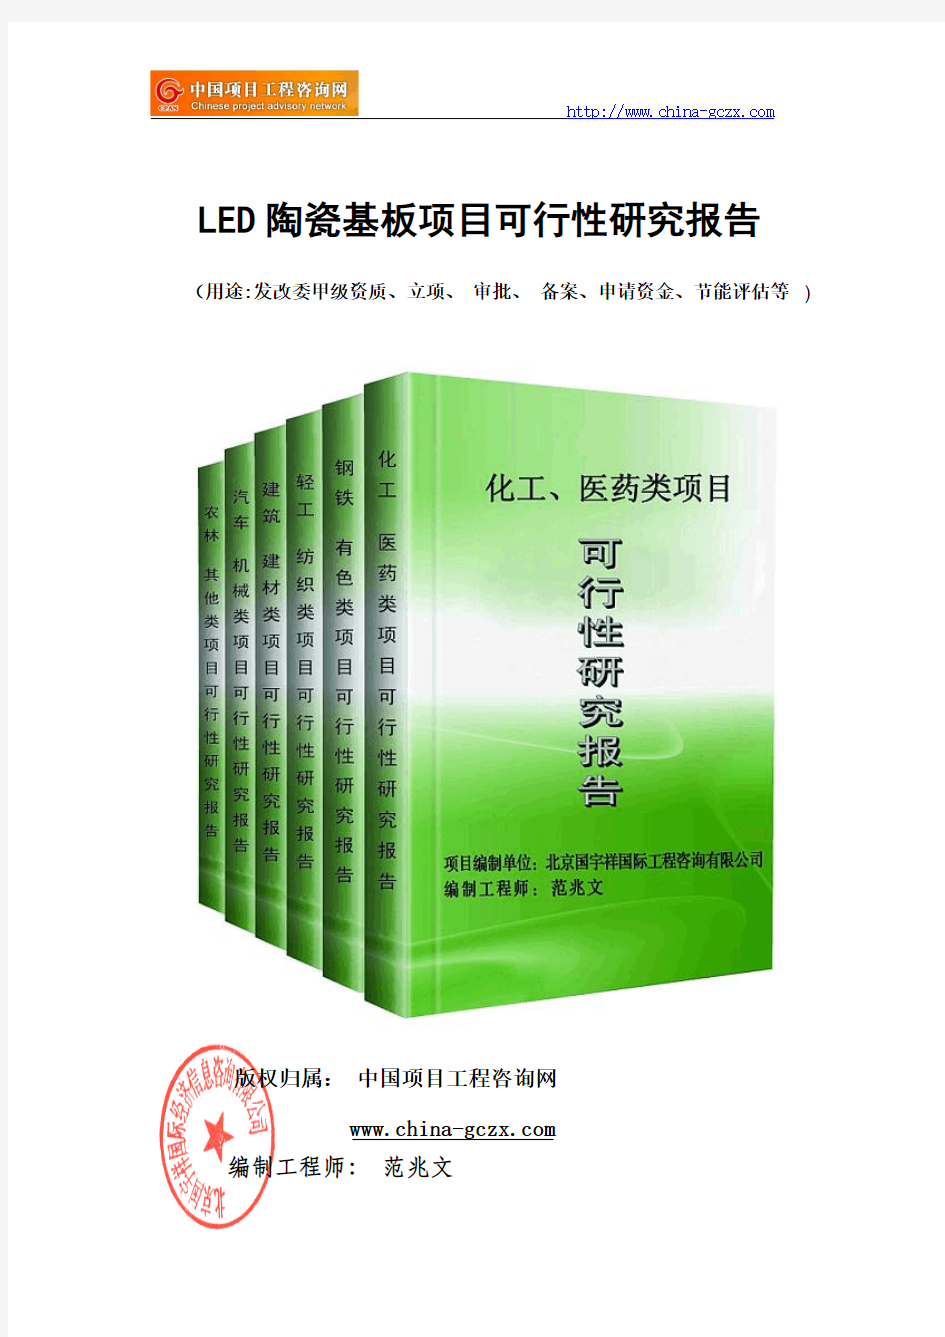 LED陶瓷基板项目可行性研究报告(模板案例)